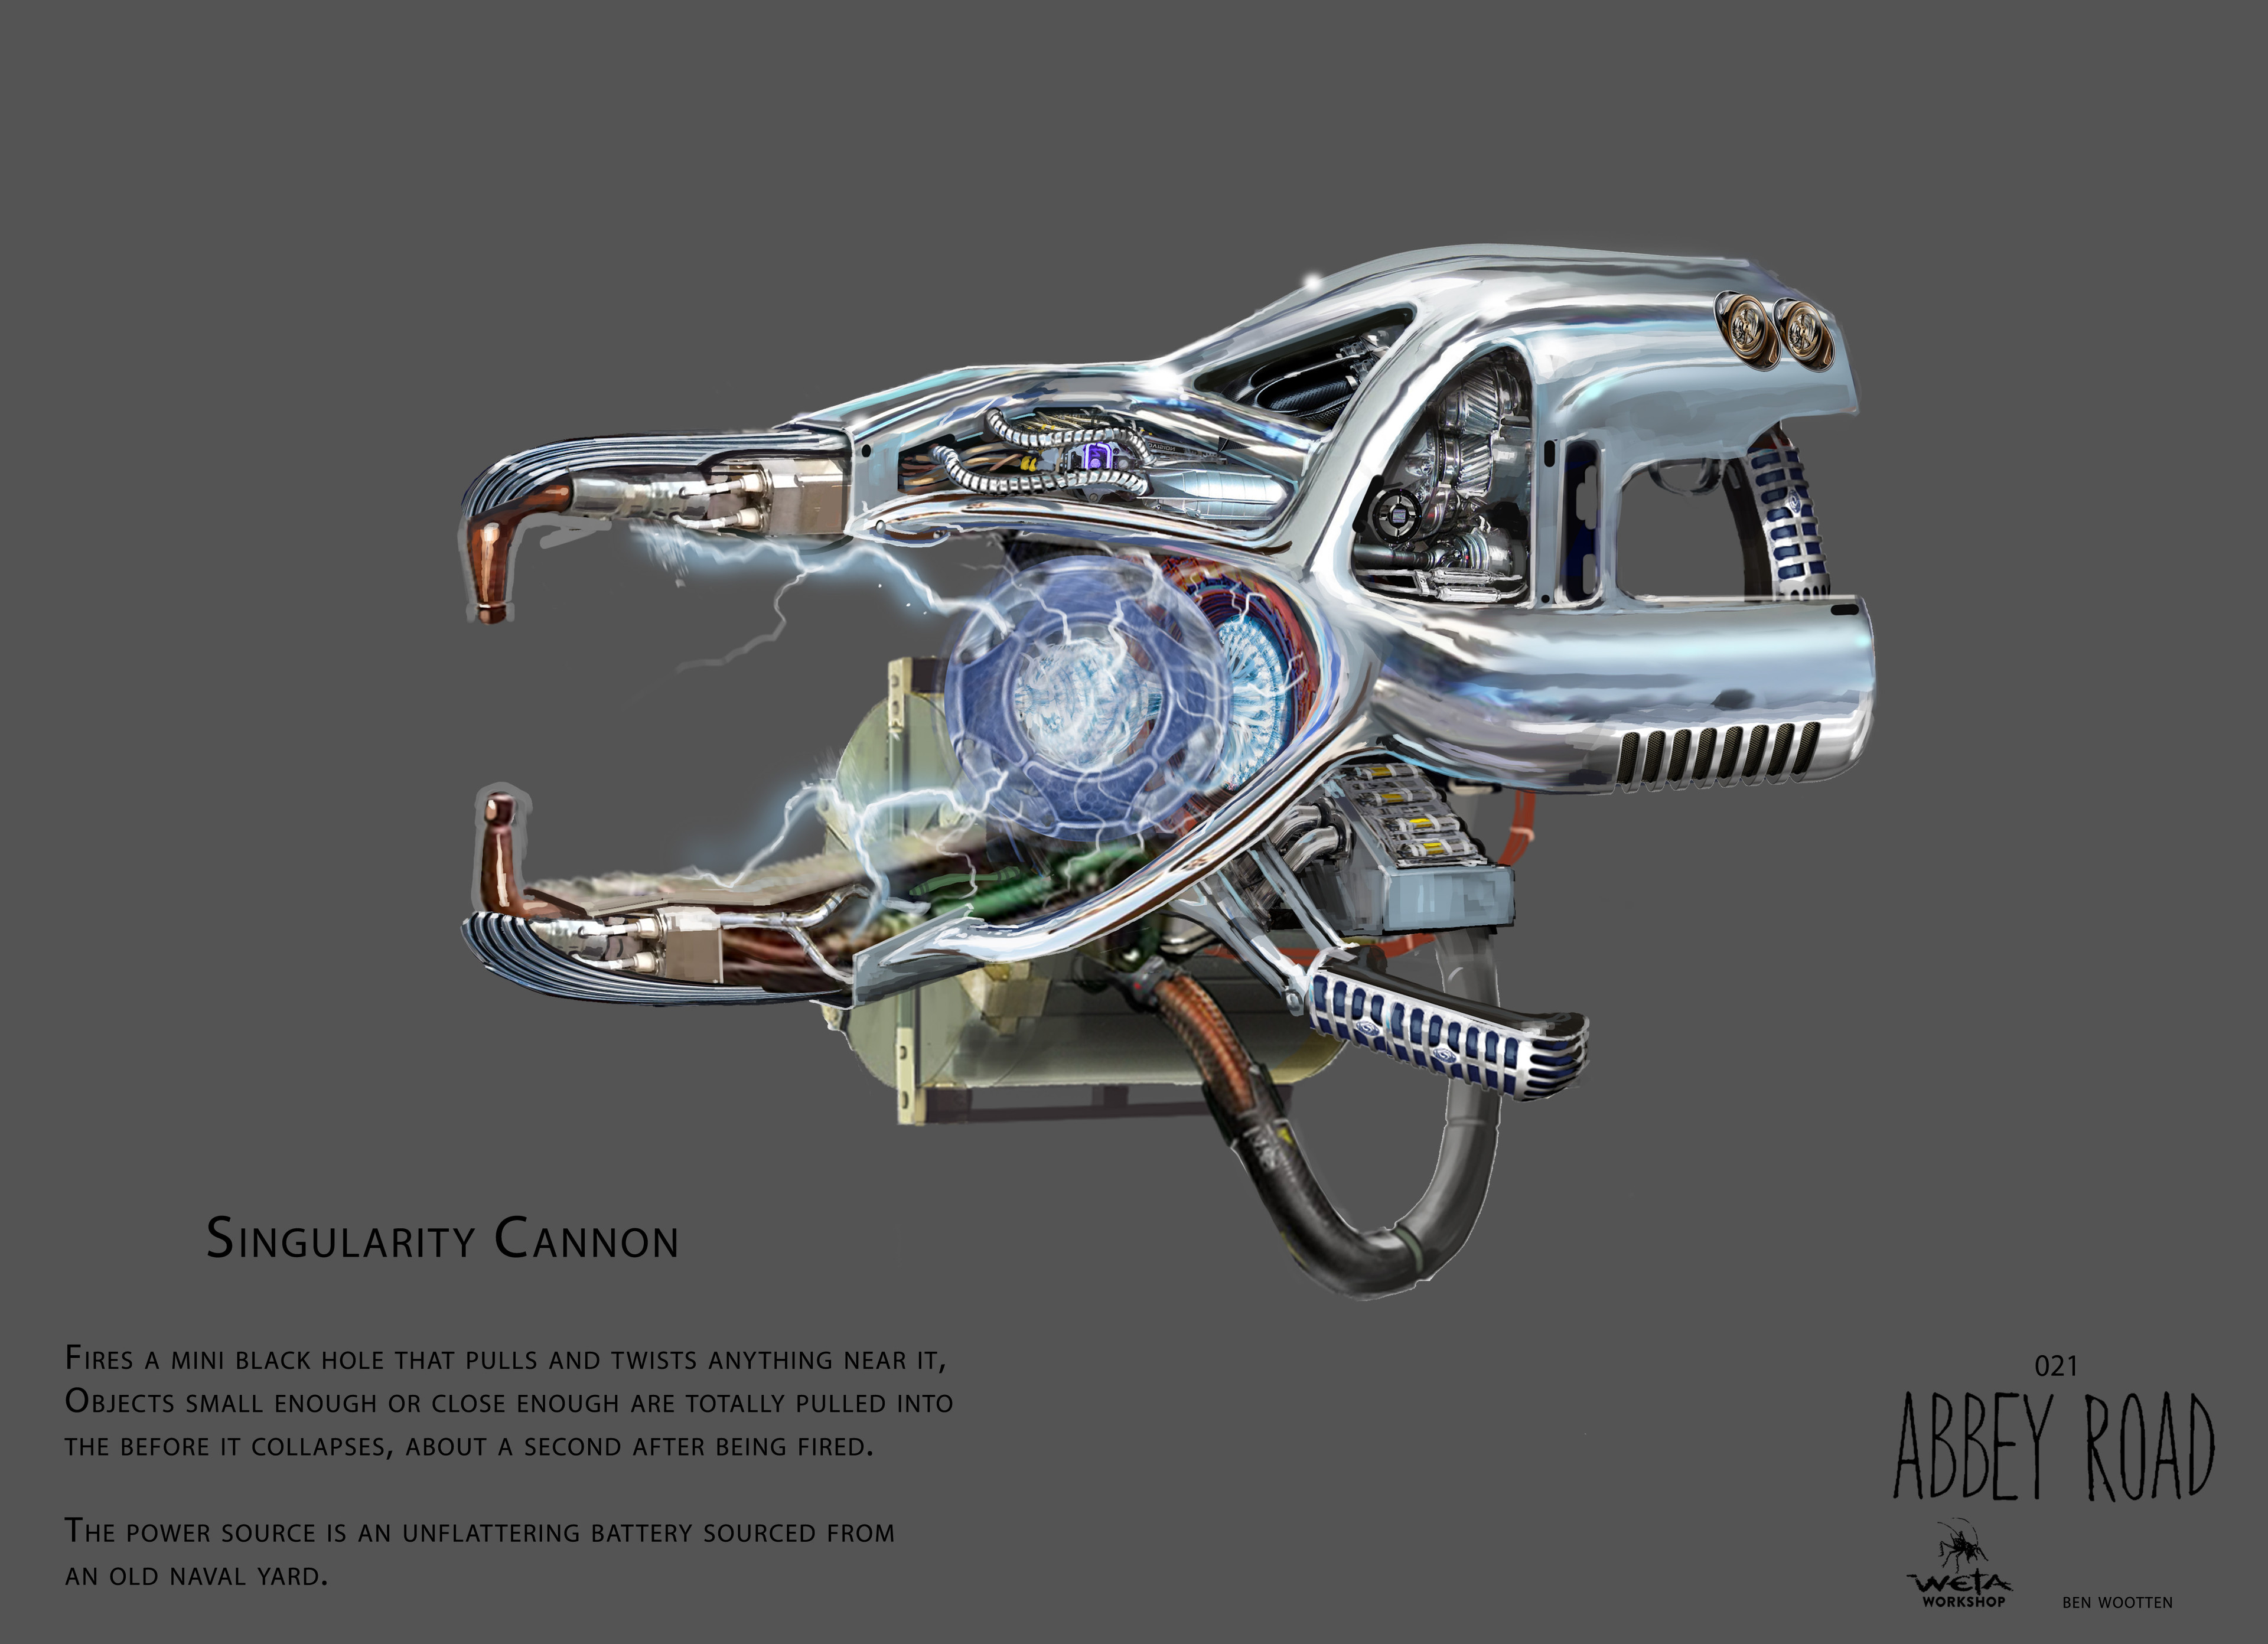 Singularity Cannon - Artist: Ben Wootten